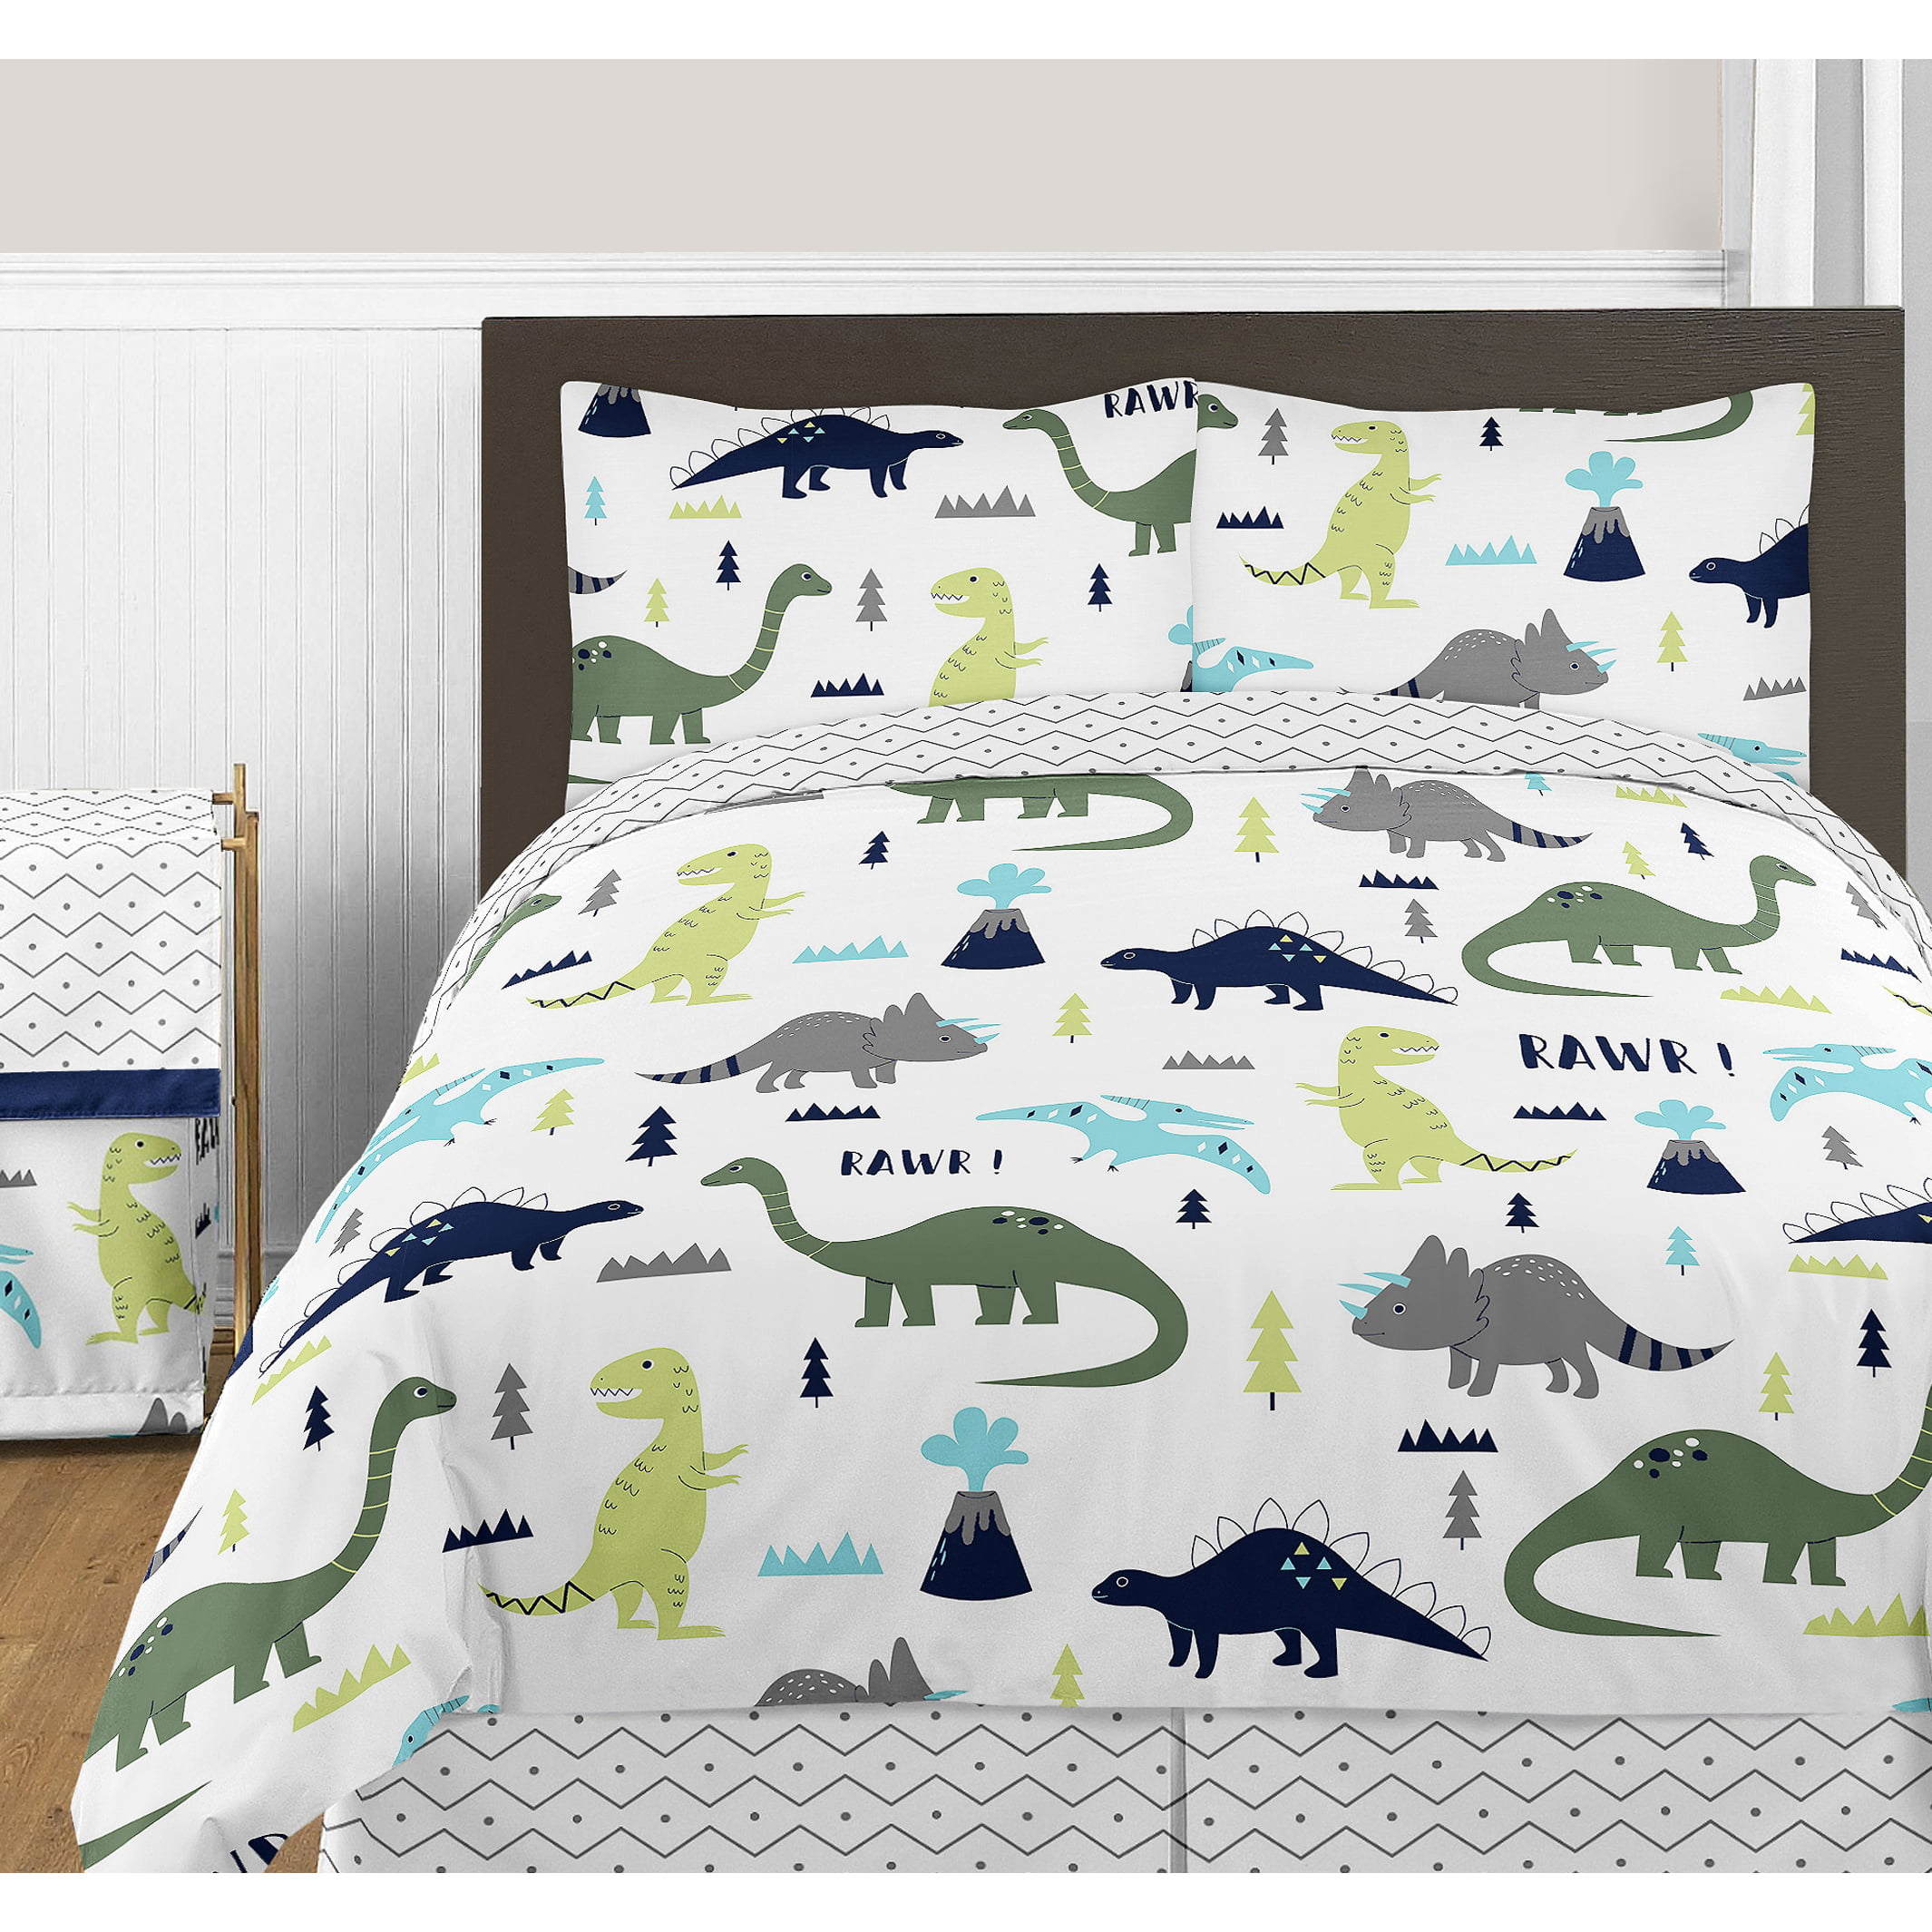 3 Pcs Set Animal Comforter Cover with Pillow Shams Vajrapani Dinosaur Bedding Set Twin Size 68”x87” for Girls Boys Black Corner Ties & Zipper Closure